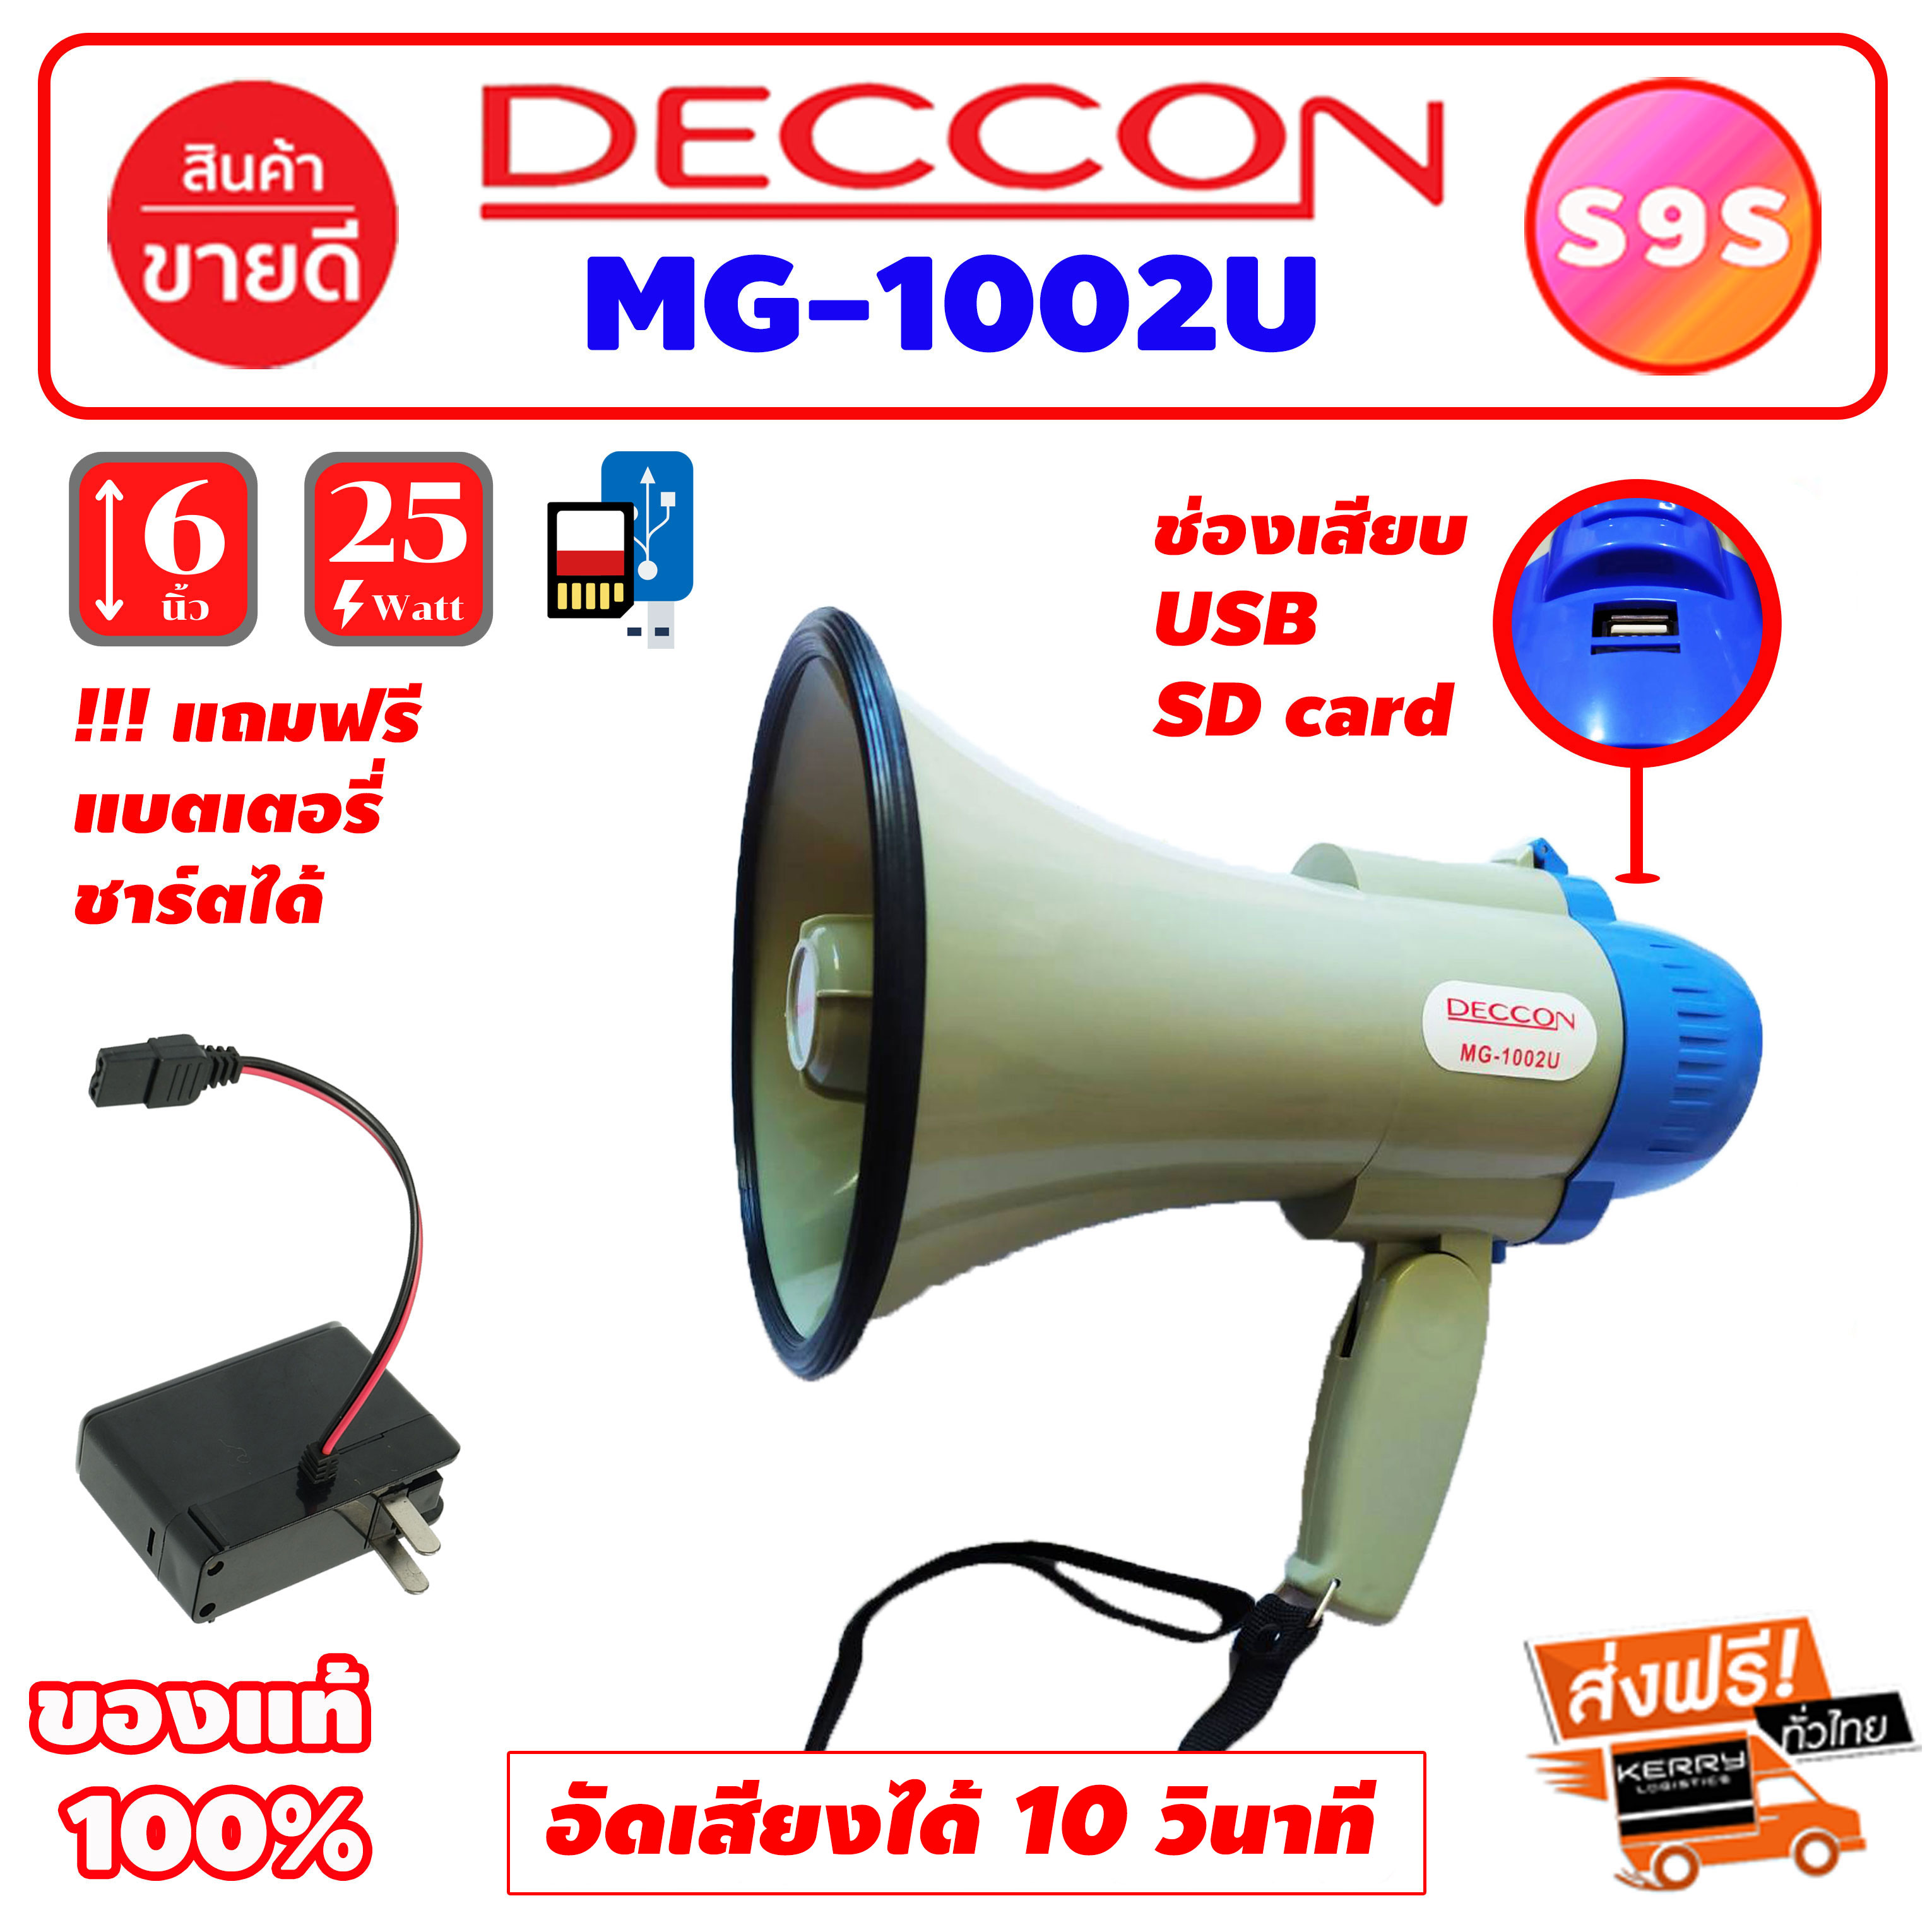 DECCON MG-1002U โทรโข่ง Megaphone ขนาด 6 นิ้ว 25 วัตต์ USB / SD Card โทรโข่งอัดเสียงได้ 10 วินาที มีแบตเตอรี่ ชาร์จได้ โทรโข่งเล็ก deccon โทรโข่งขายของ โทรโข่งพกพา โทรโข่ง ราคาถูก ลำโพงโทรโข่ง ทอระโข่ง ทอละโข่ง MG-1002